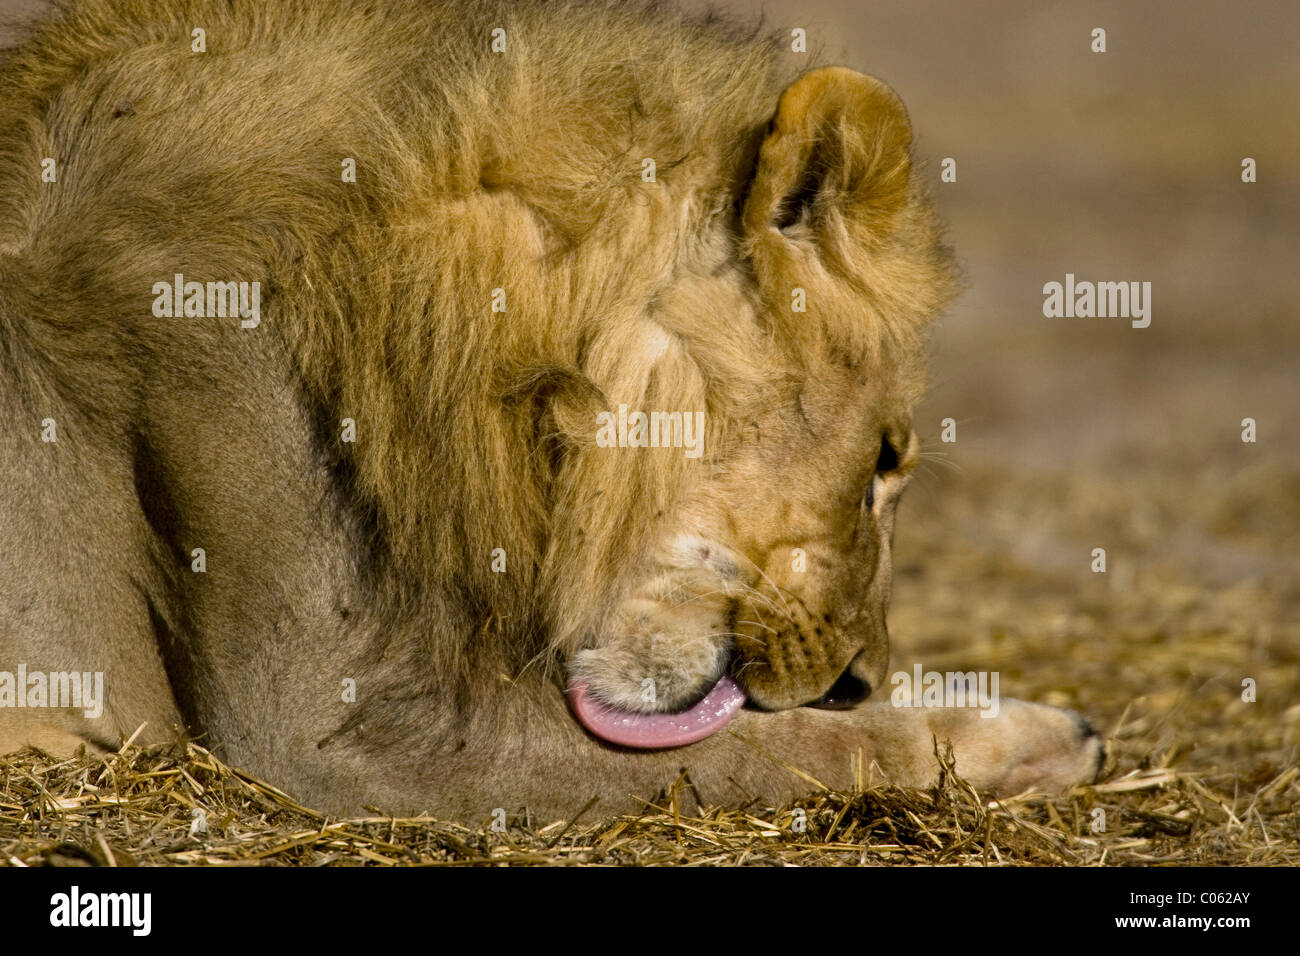 Male lion licking his leg, Etosha National Park, Namibia Stock Photo